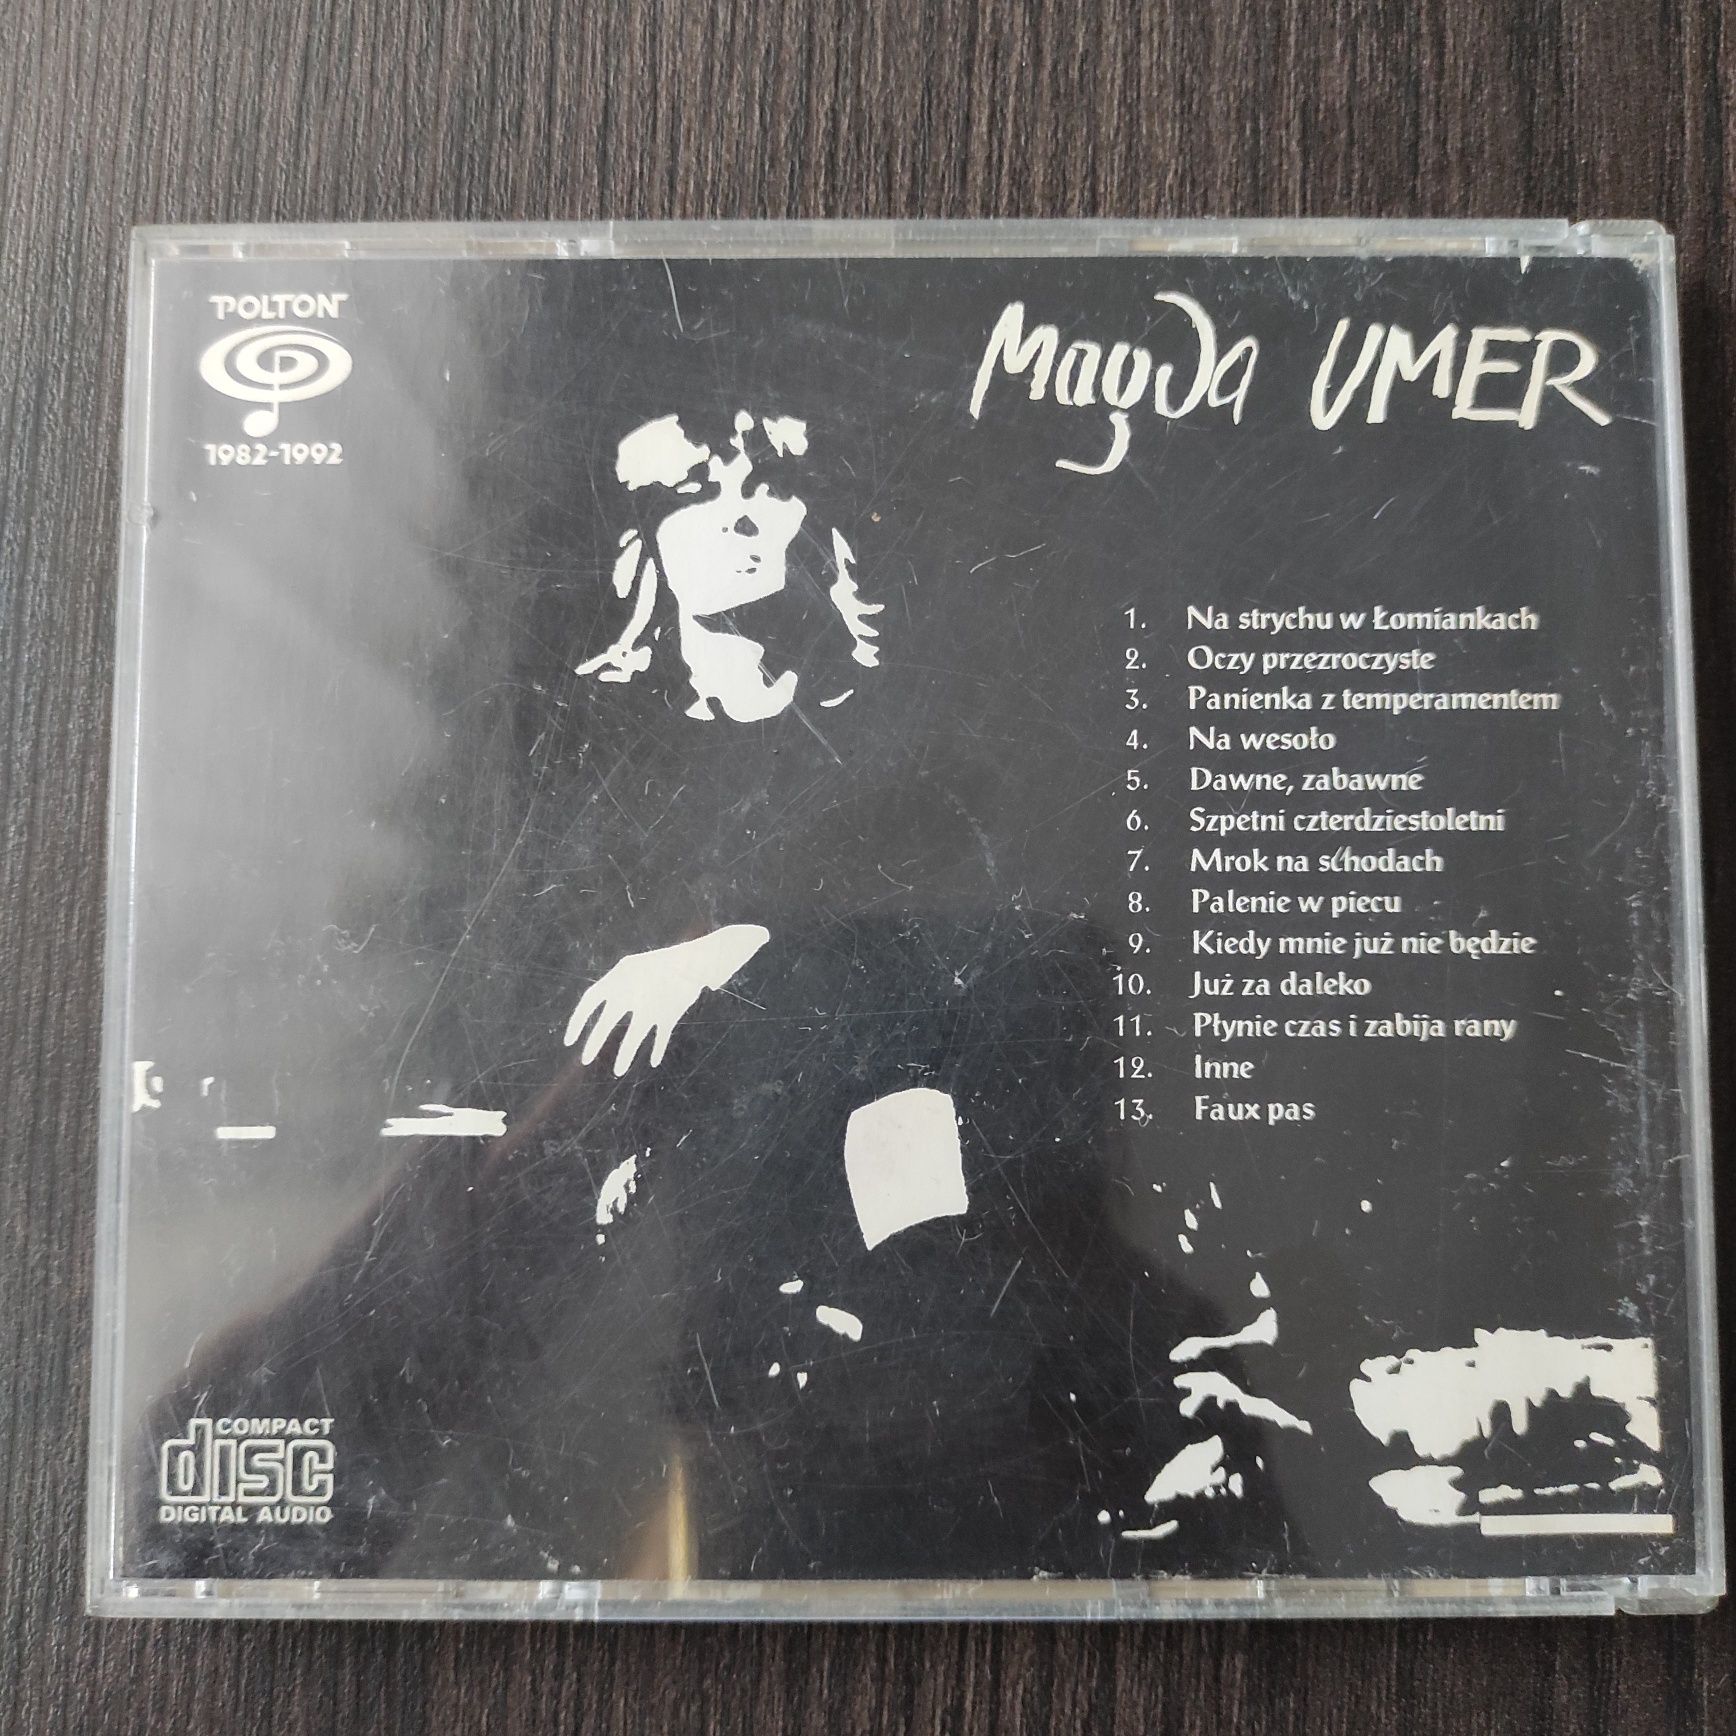 Magda Umer CD Polton 1992